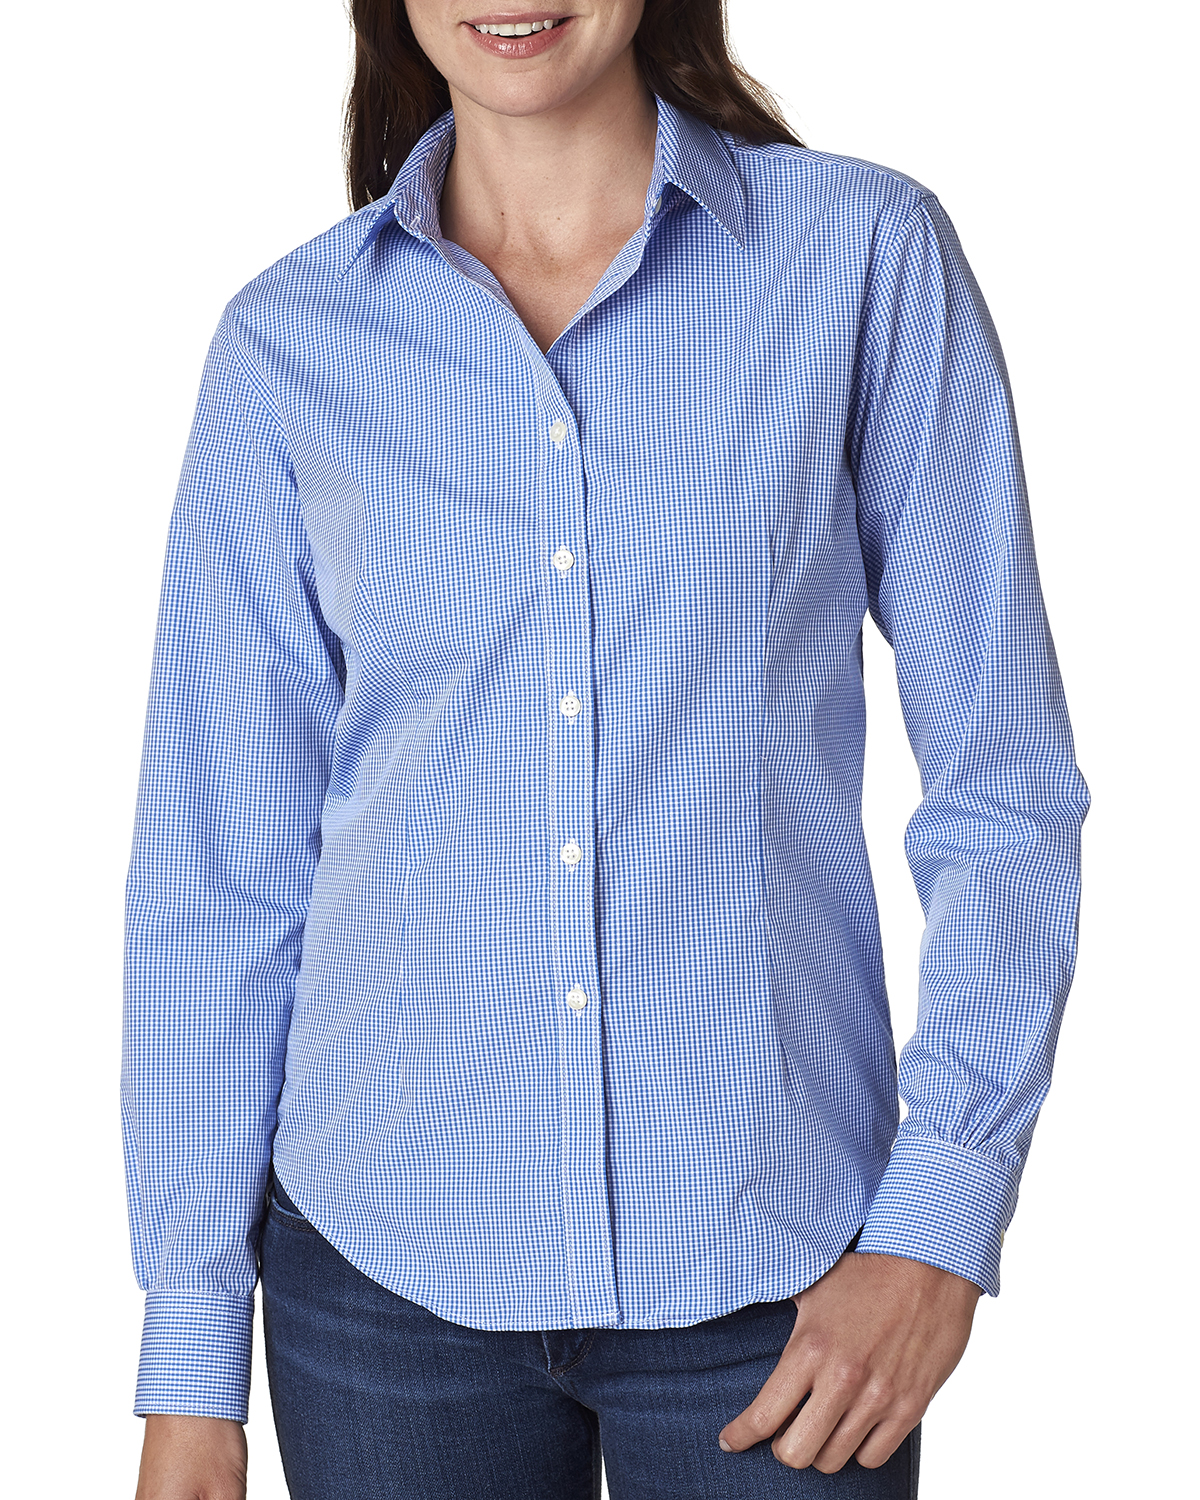 Van Heusen V0226 - Ladies' Long-Sleeve Yarn-Dyed Gingham Check Woven Shirt